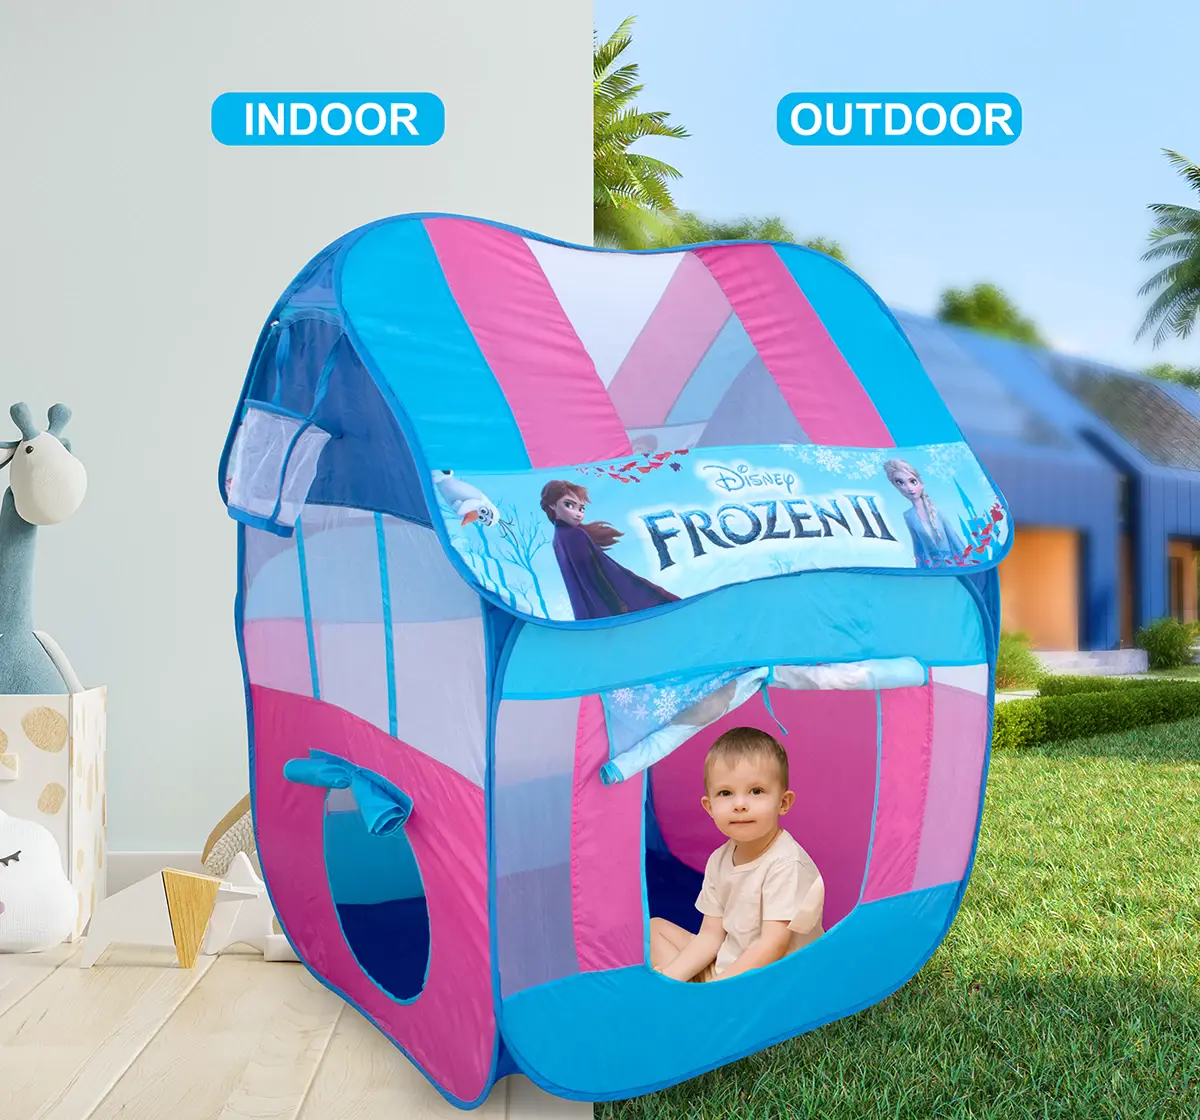 Disney Frozen Foldable Playhouse Tent for kids Multicolor 24M+